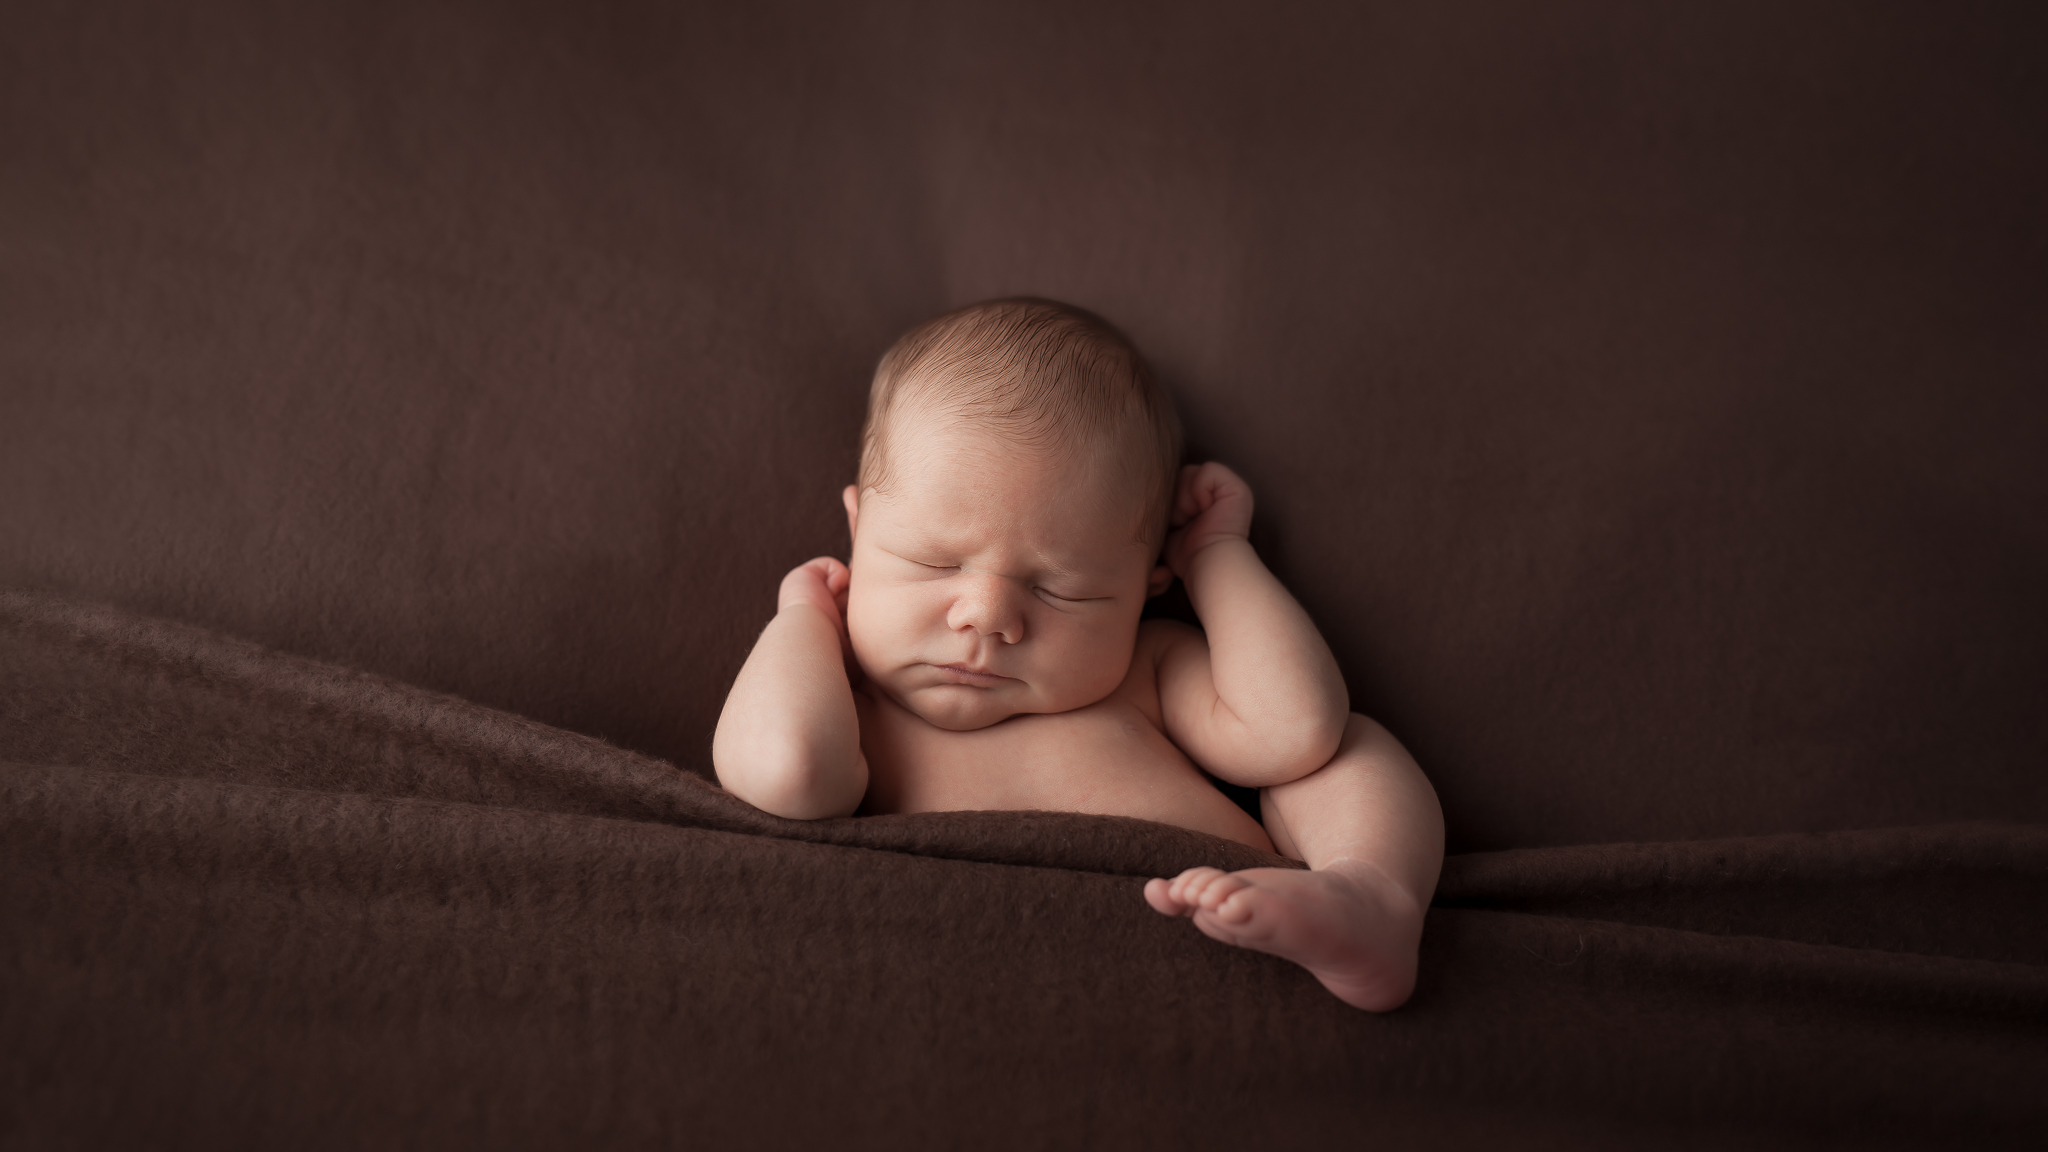 Newborn297NaomiLuciennePhotography052018-Edit.jpg